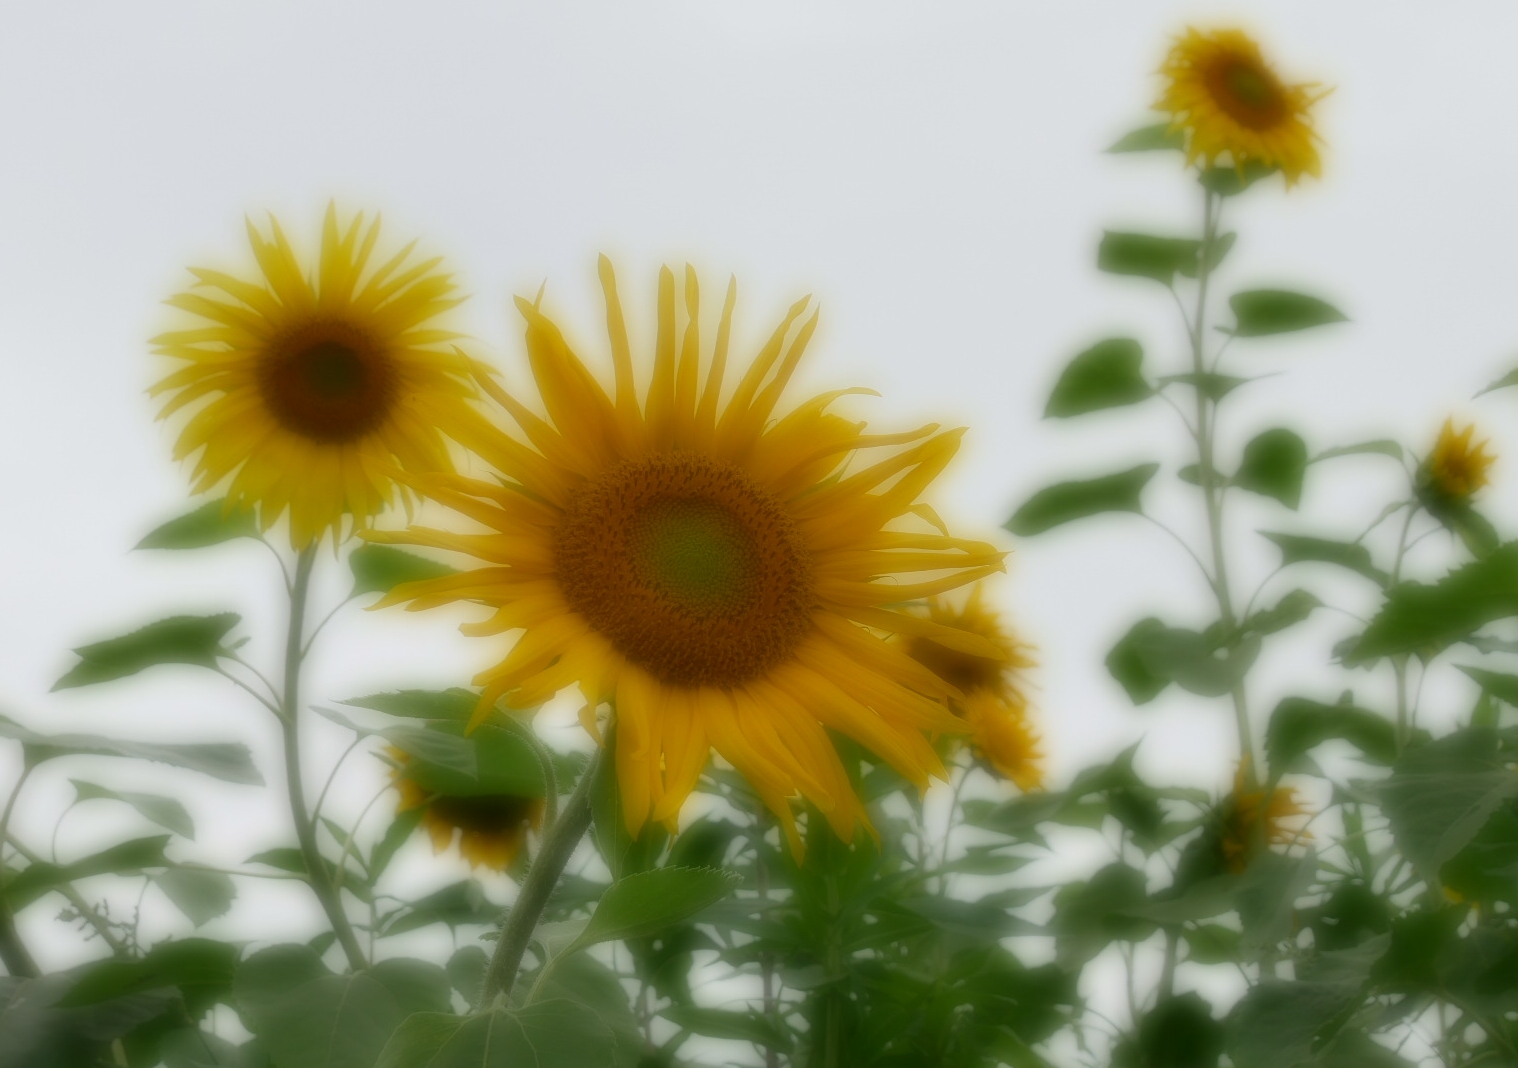 Sonnenblumen 